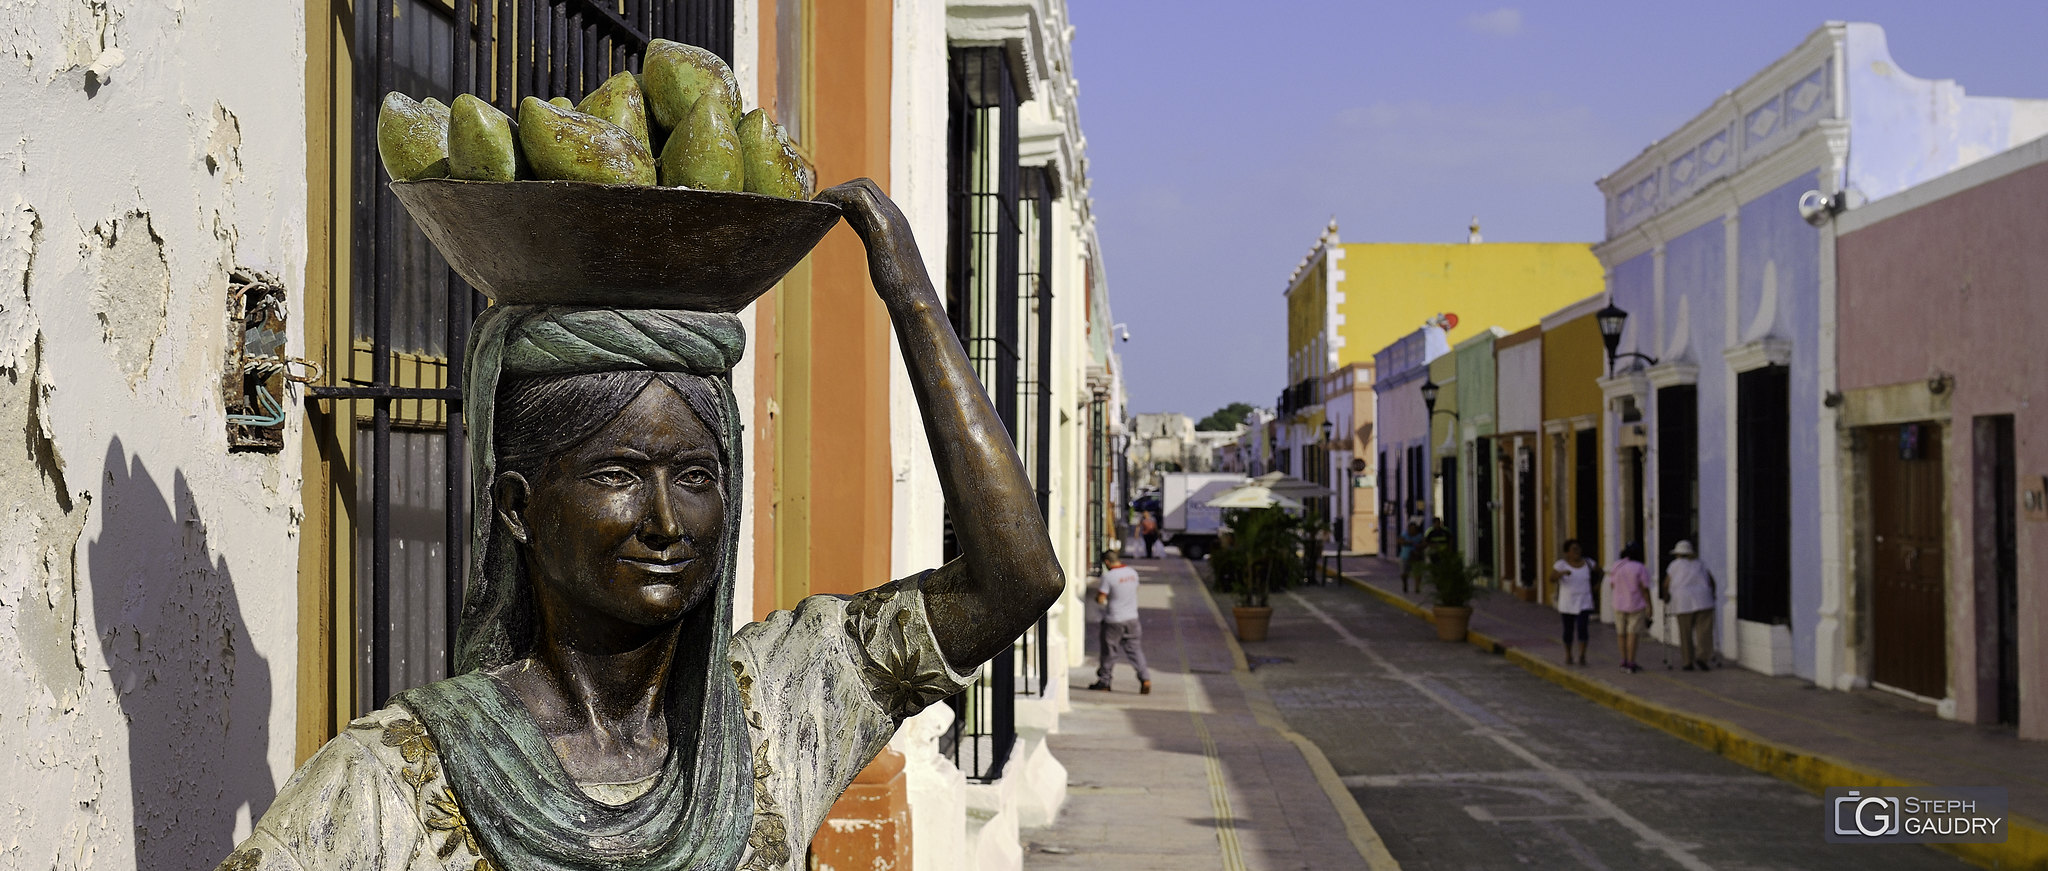 Campeche - Statue de femme avec panier de fruits [Klicken Sie hier, um die Diashow zu starten]